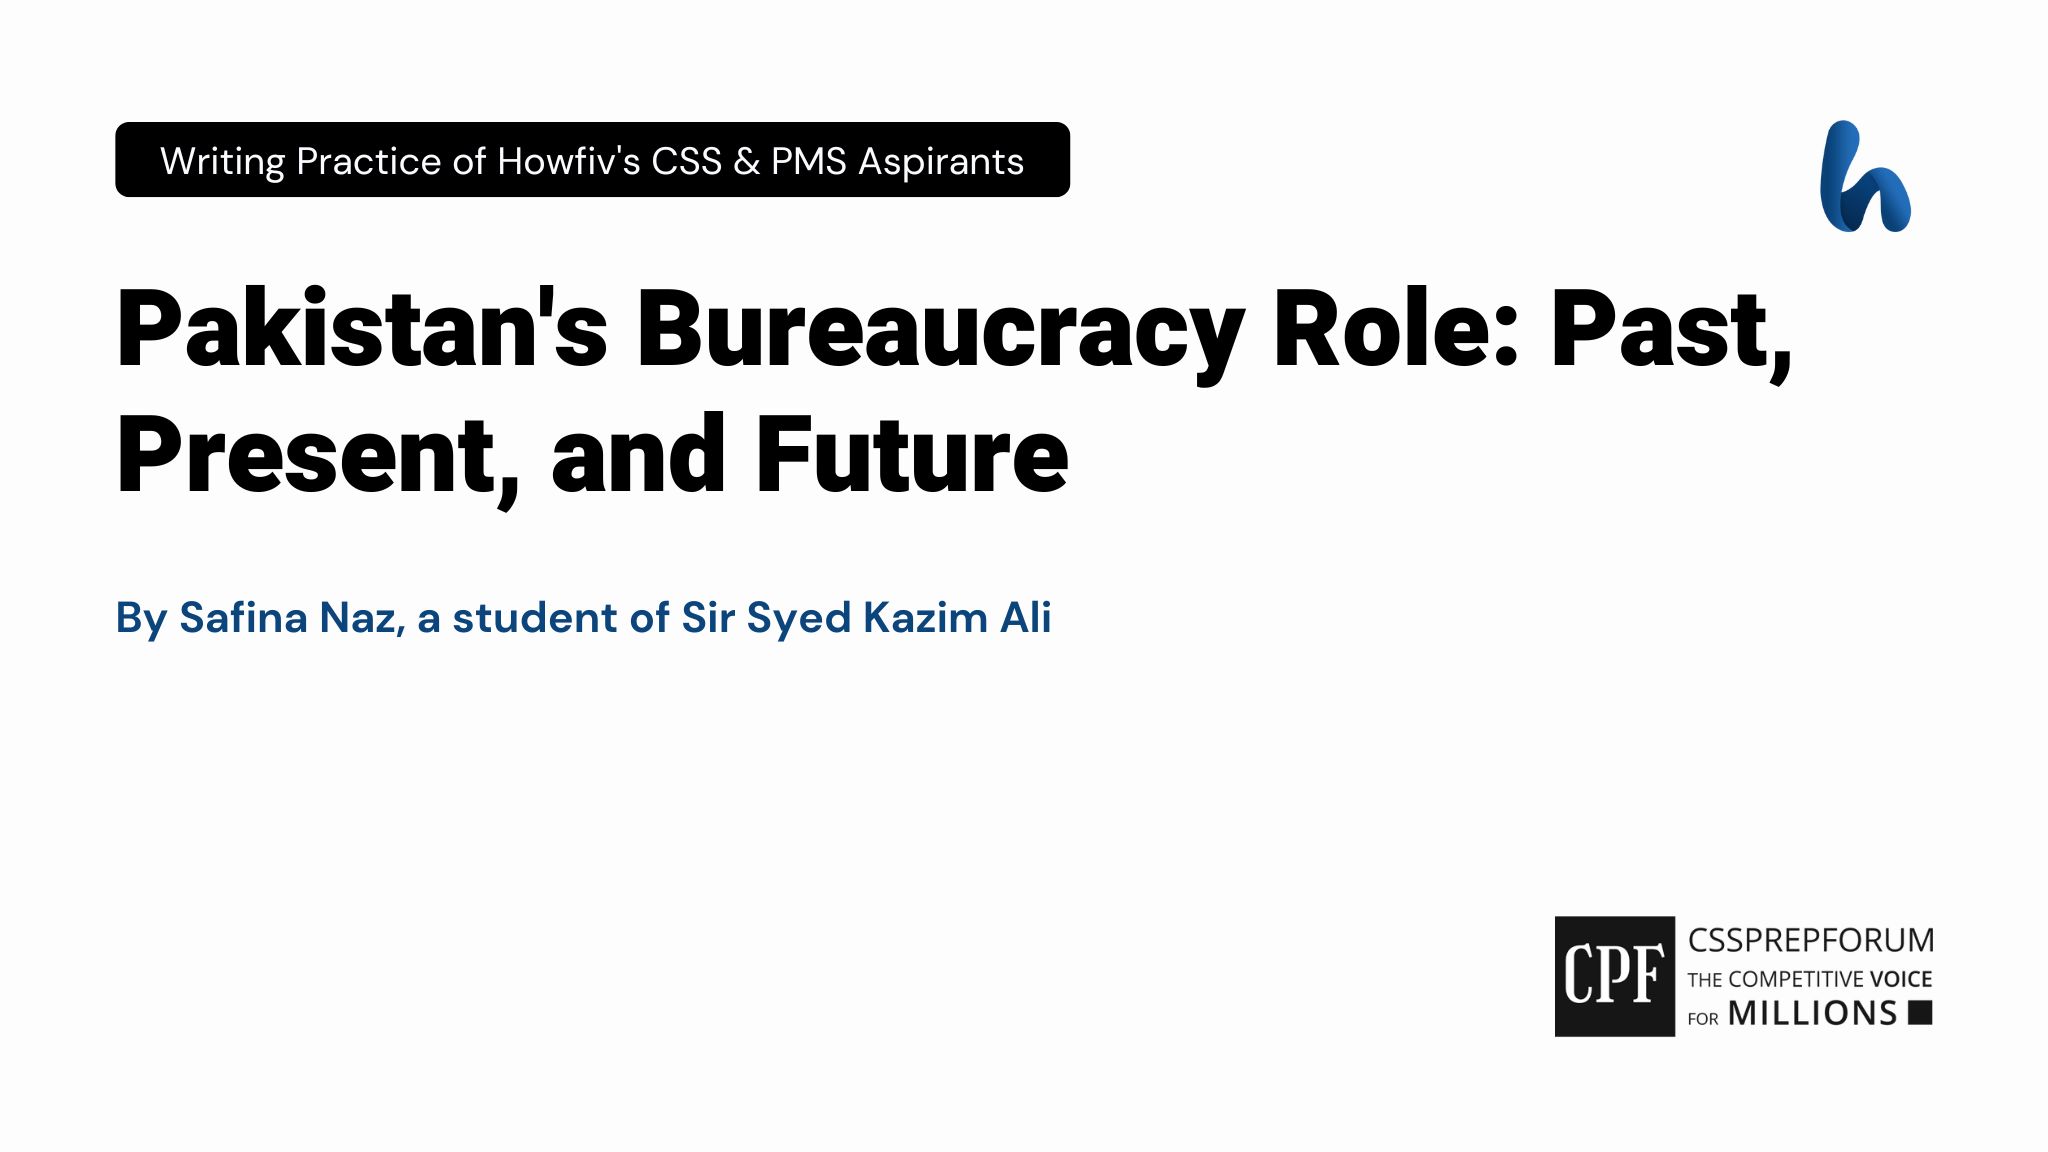 Pakistan's Bureaucracy Role Past, Present, and Future by Safina Naz